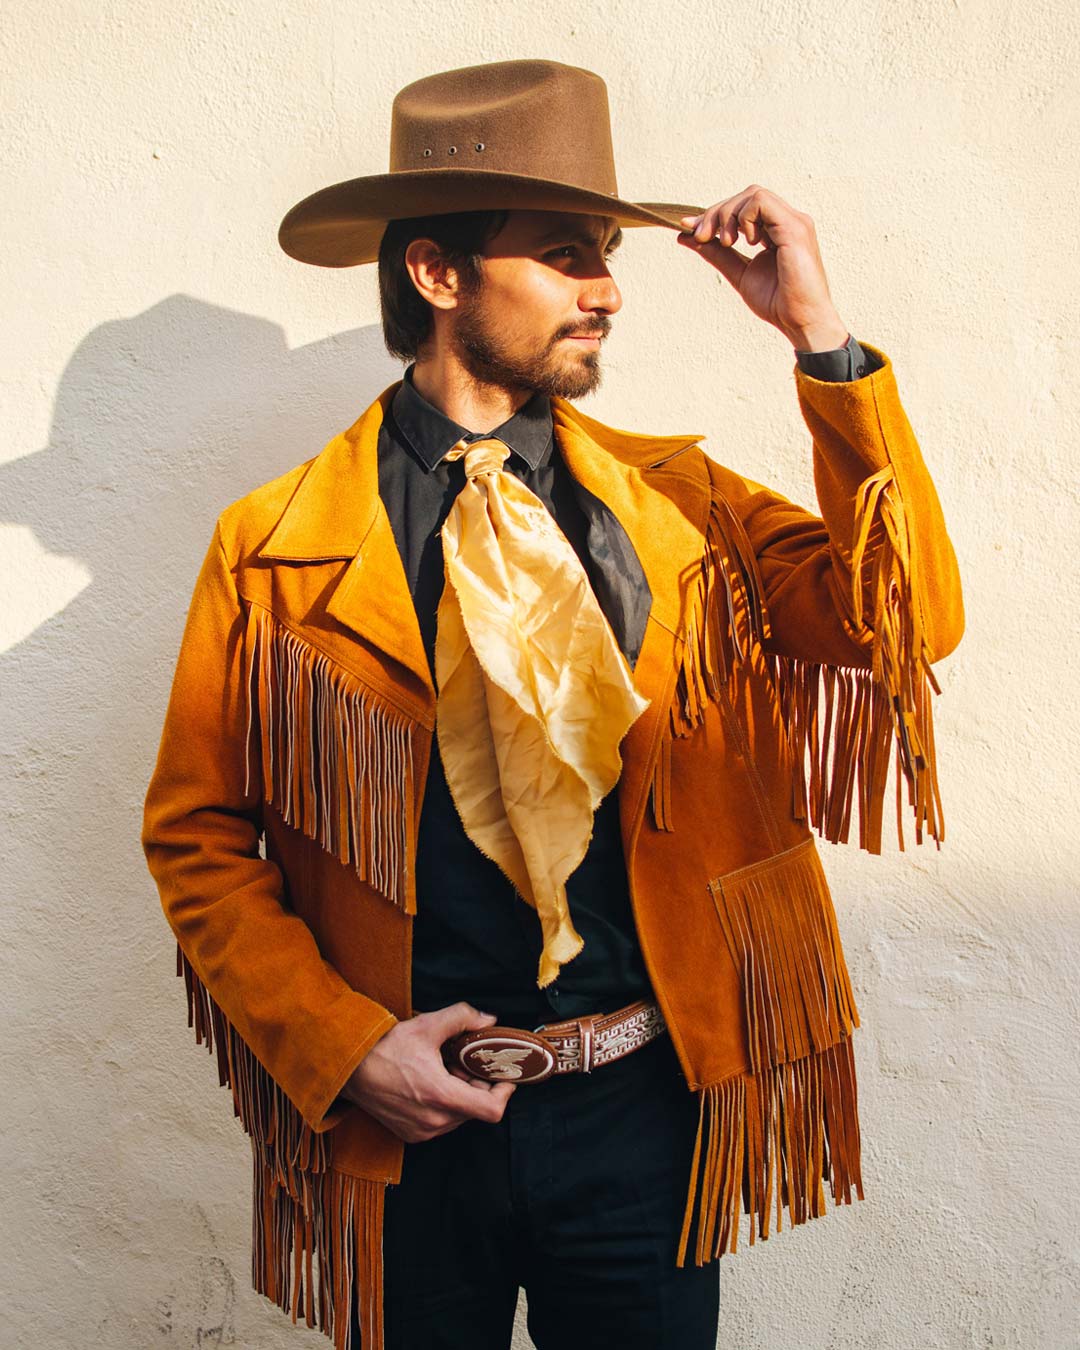 bachelor party ideas play western cowboy theme